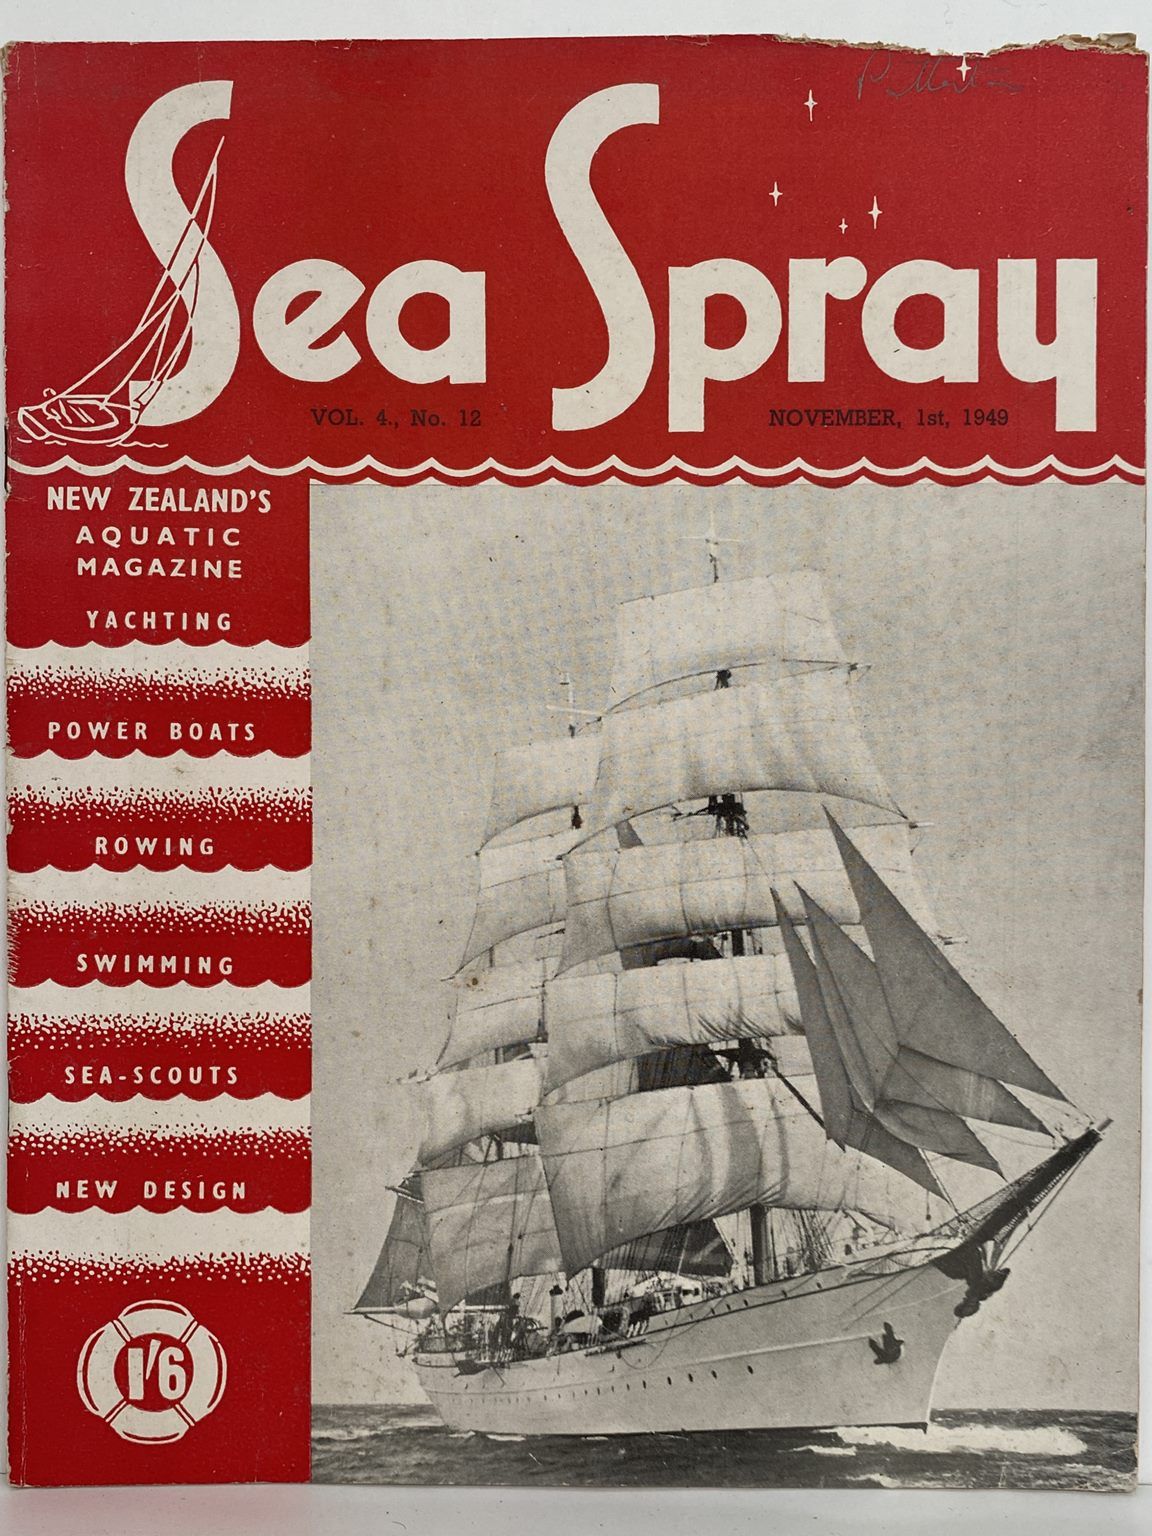 VINTAGE MAGAZINE: Sea Spray - Vol. 4, No. 12 - November 1949